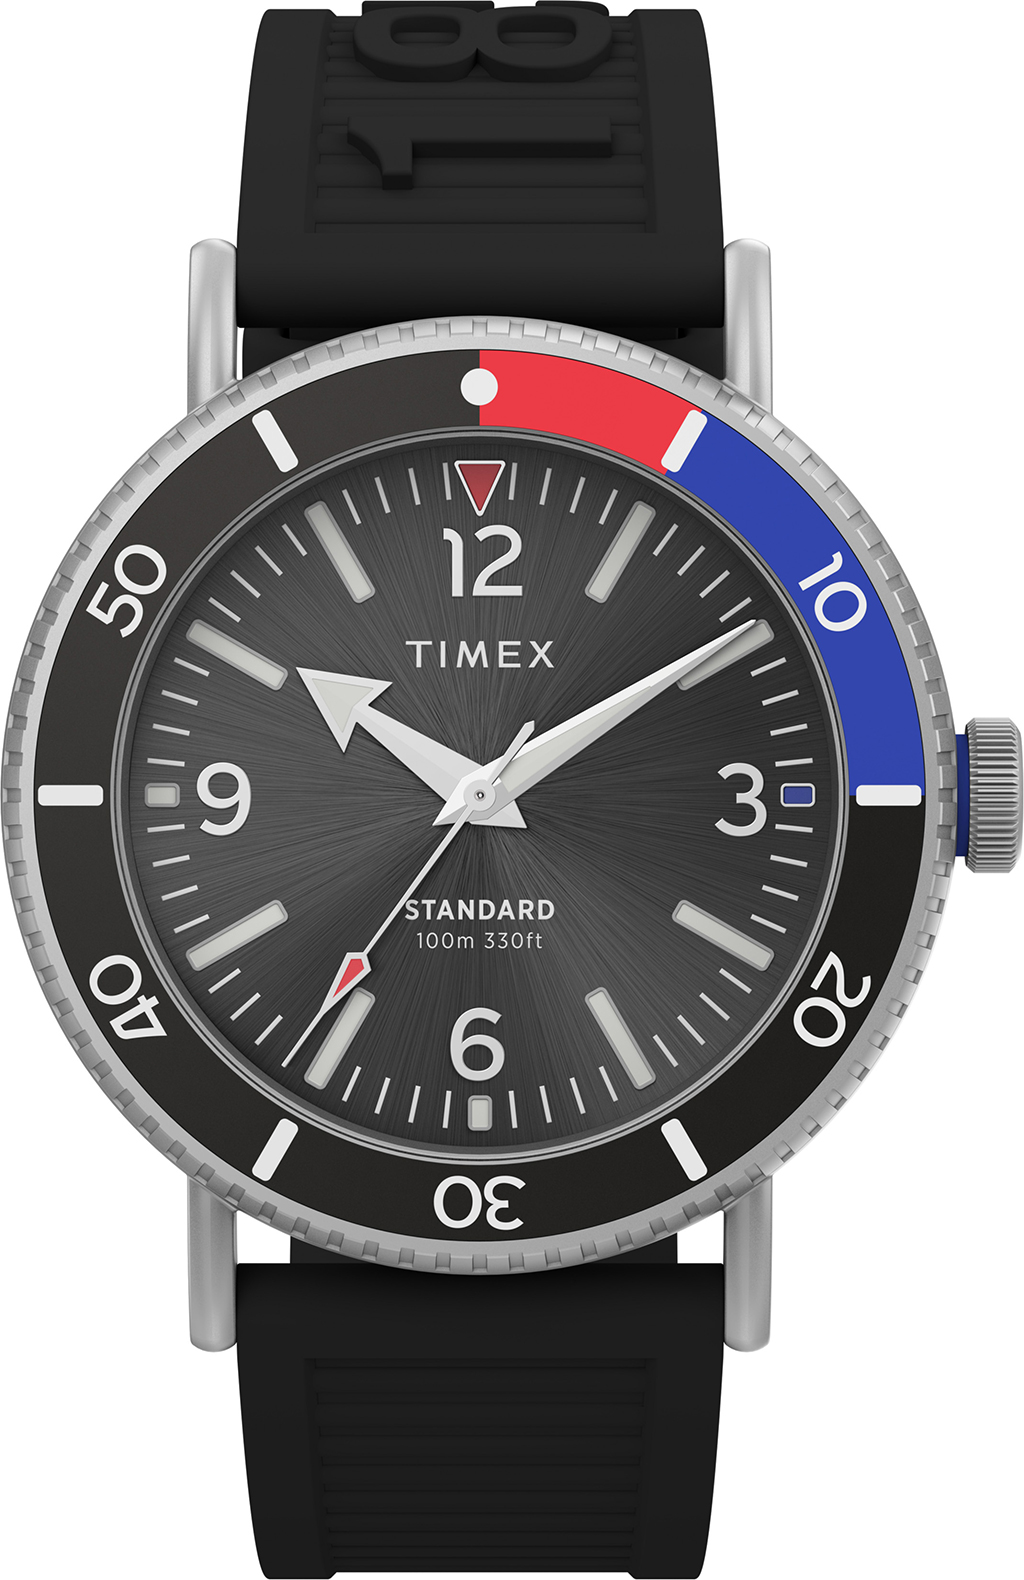 TIMEX Standard Diver lifestyle